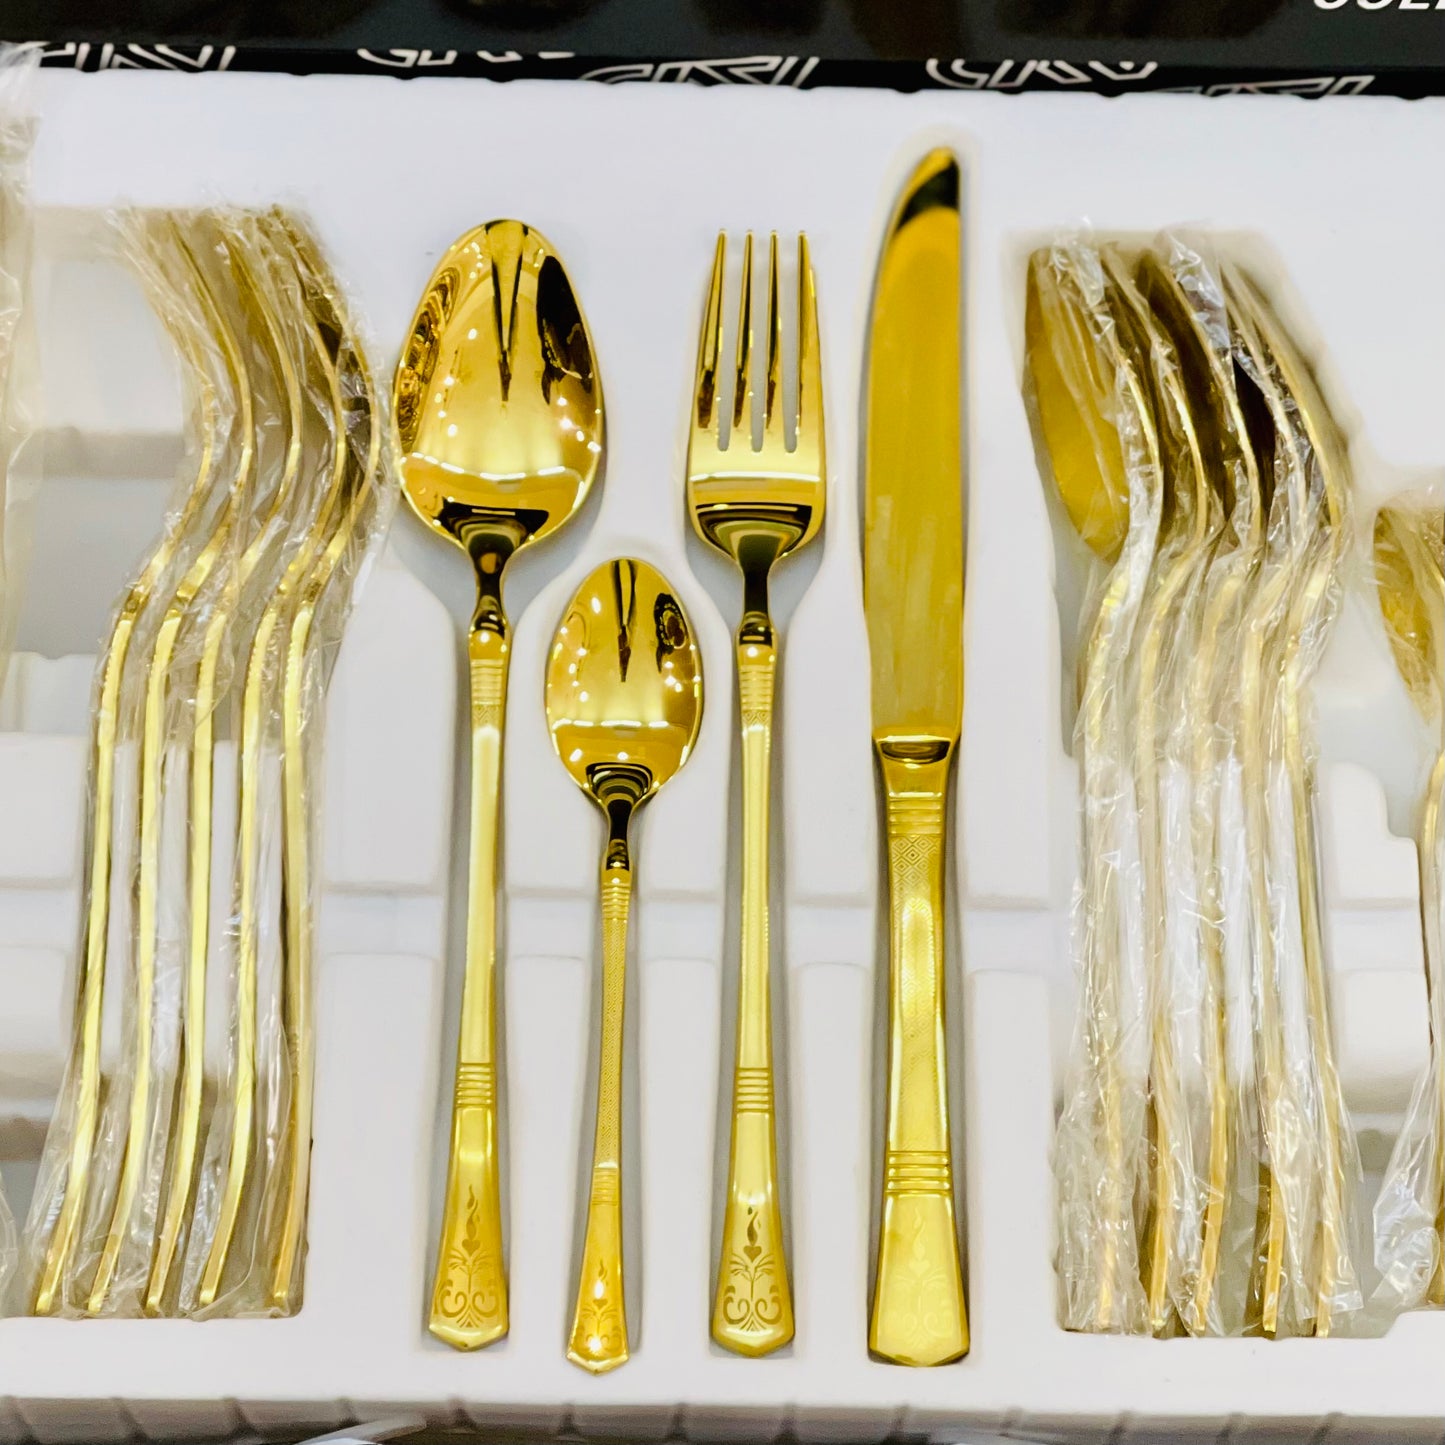 AYD 24-Pcs Elegant Cutlery Set